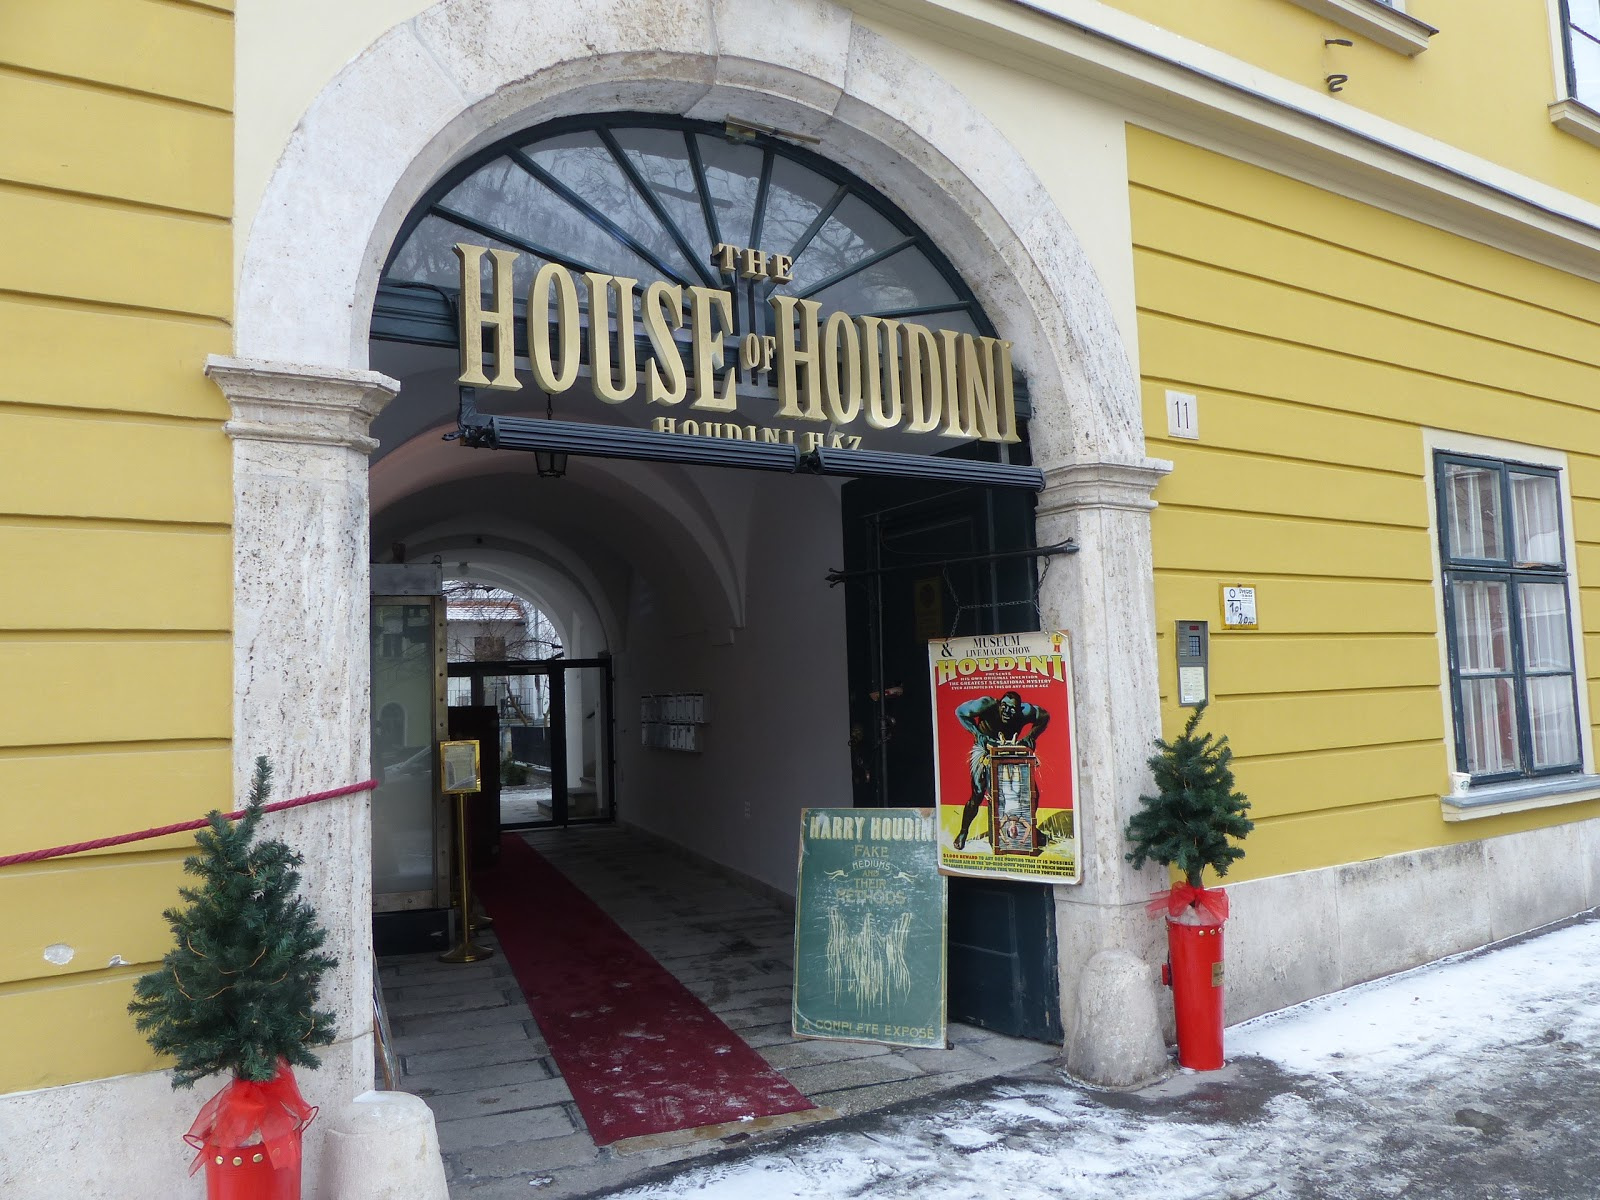 Budapest, a Budai várnegyed, the House of Houdini, SzG3